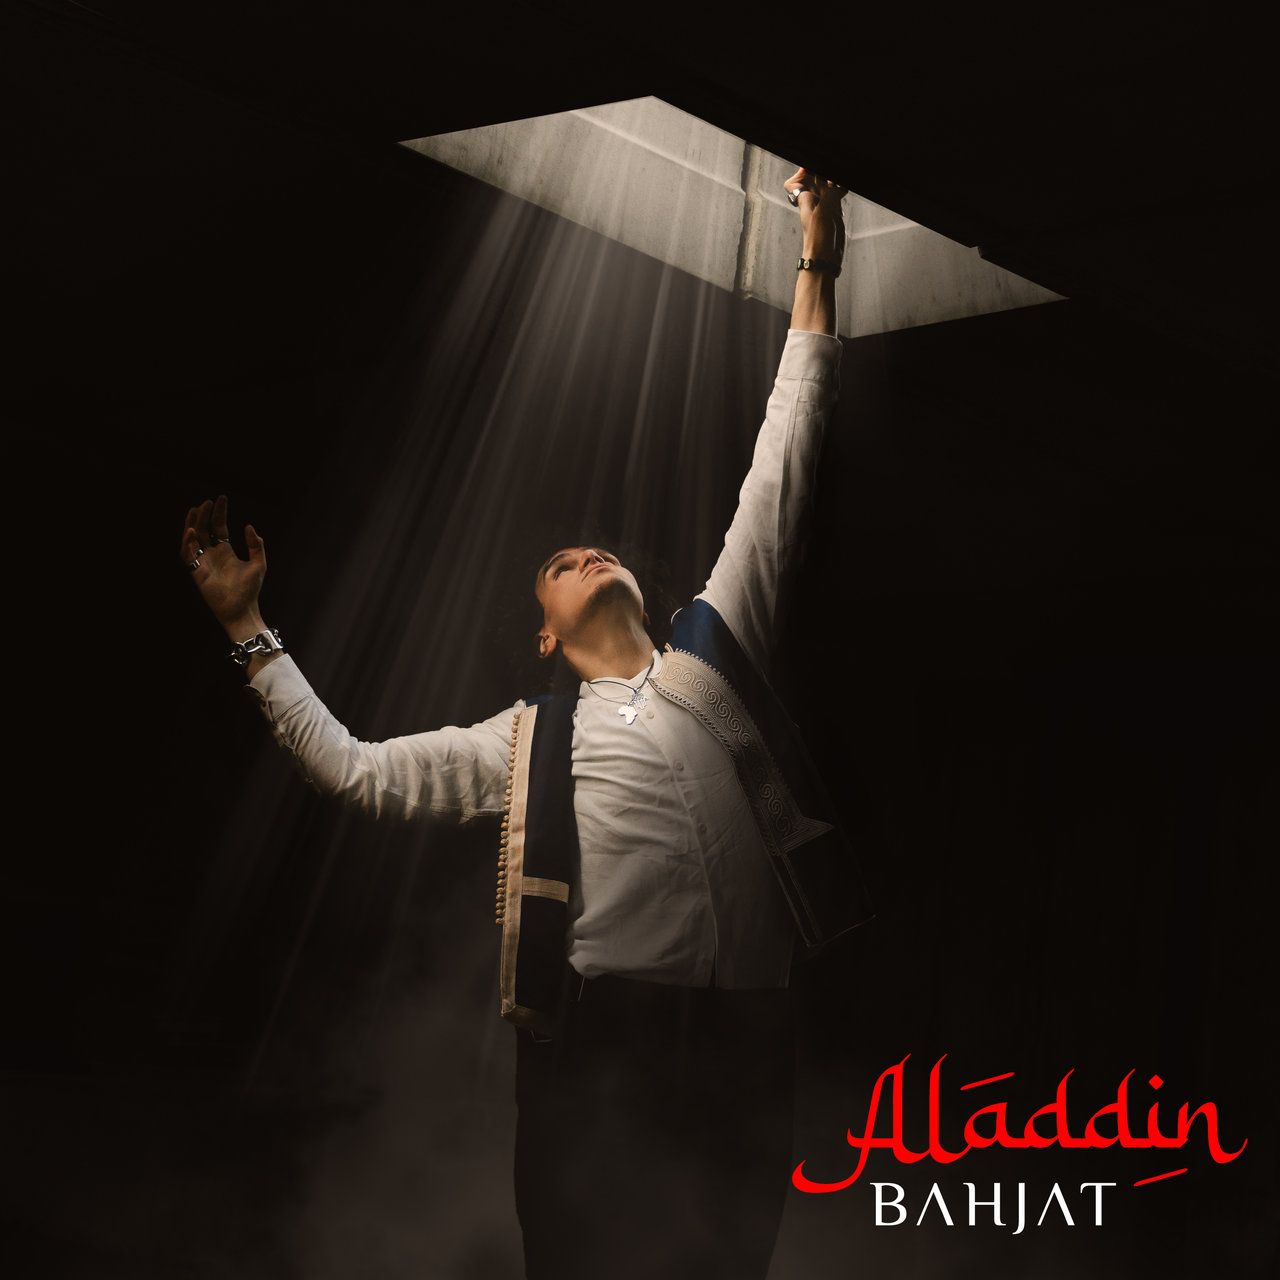 Bahjat — Aladdin cover artwork